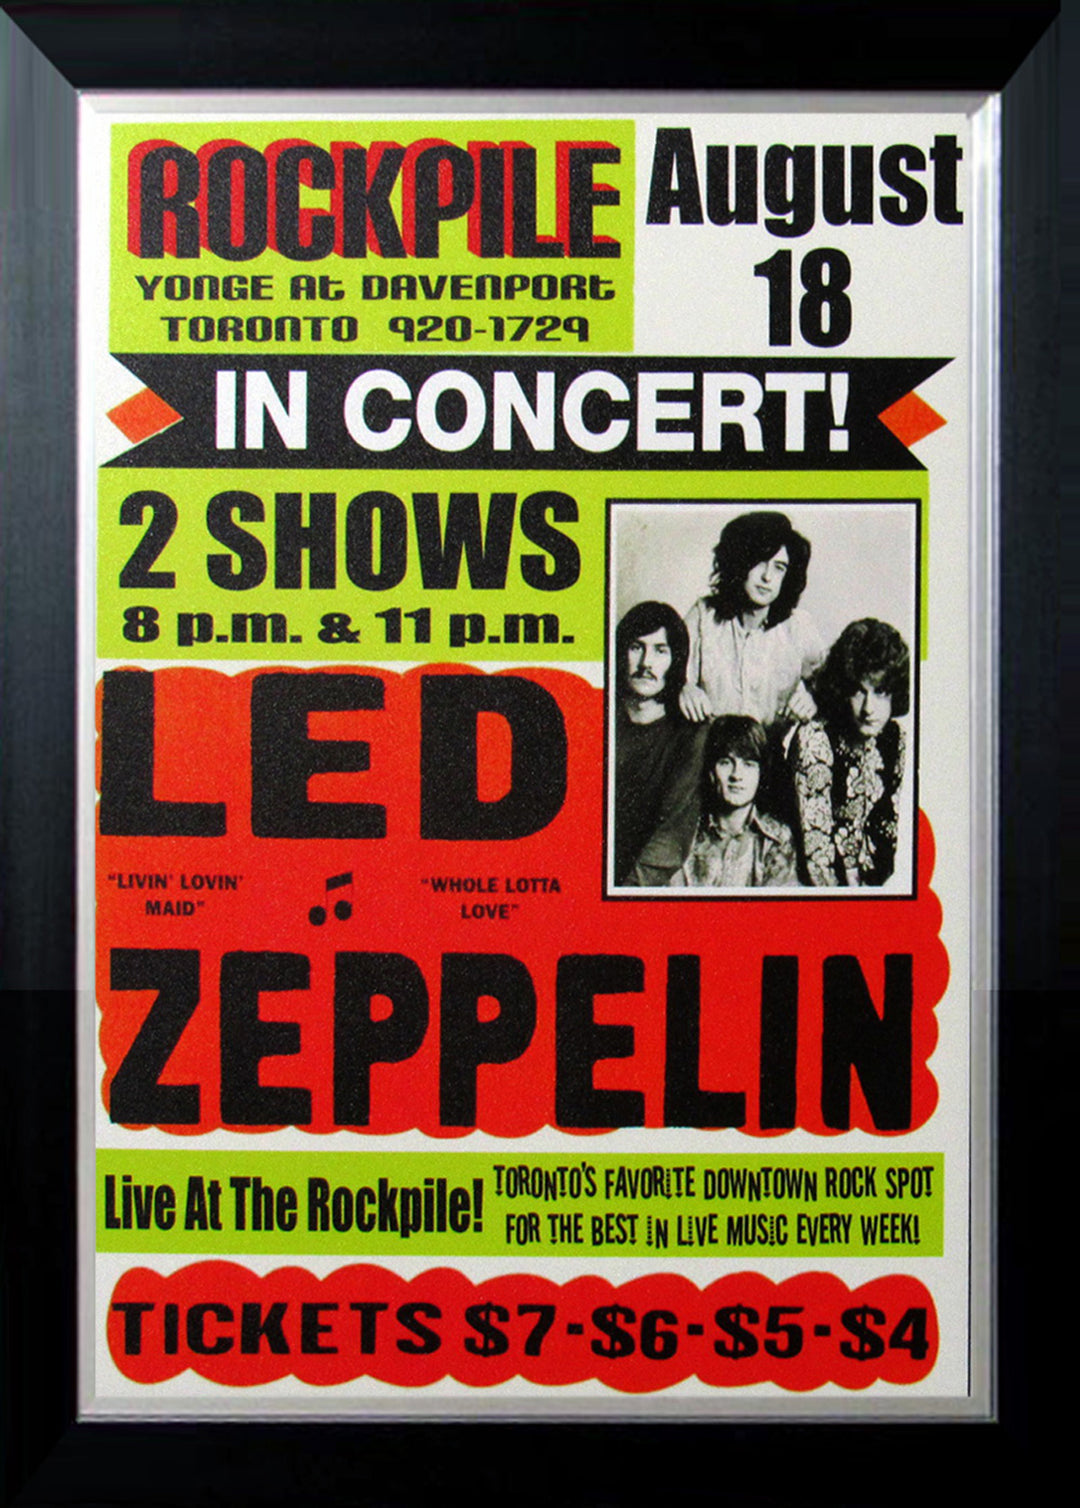 Led Zeppelin Aug 1969 Toronto Rockpile Concert Poster Print, Led Zeppelin, Pop Culture Art, Music, Collectibile Memorabilia, AAAPM32455